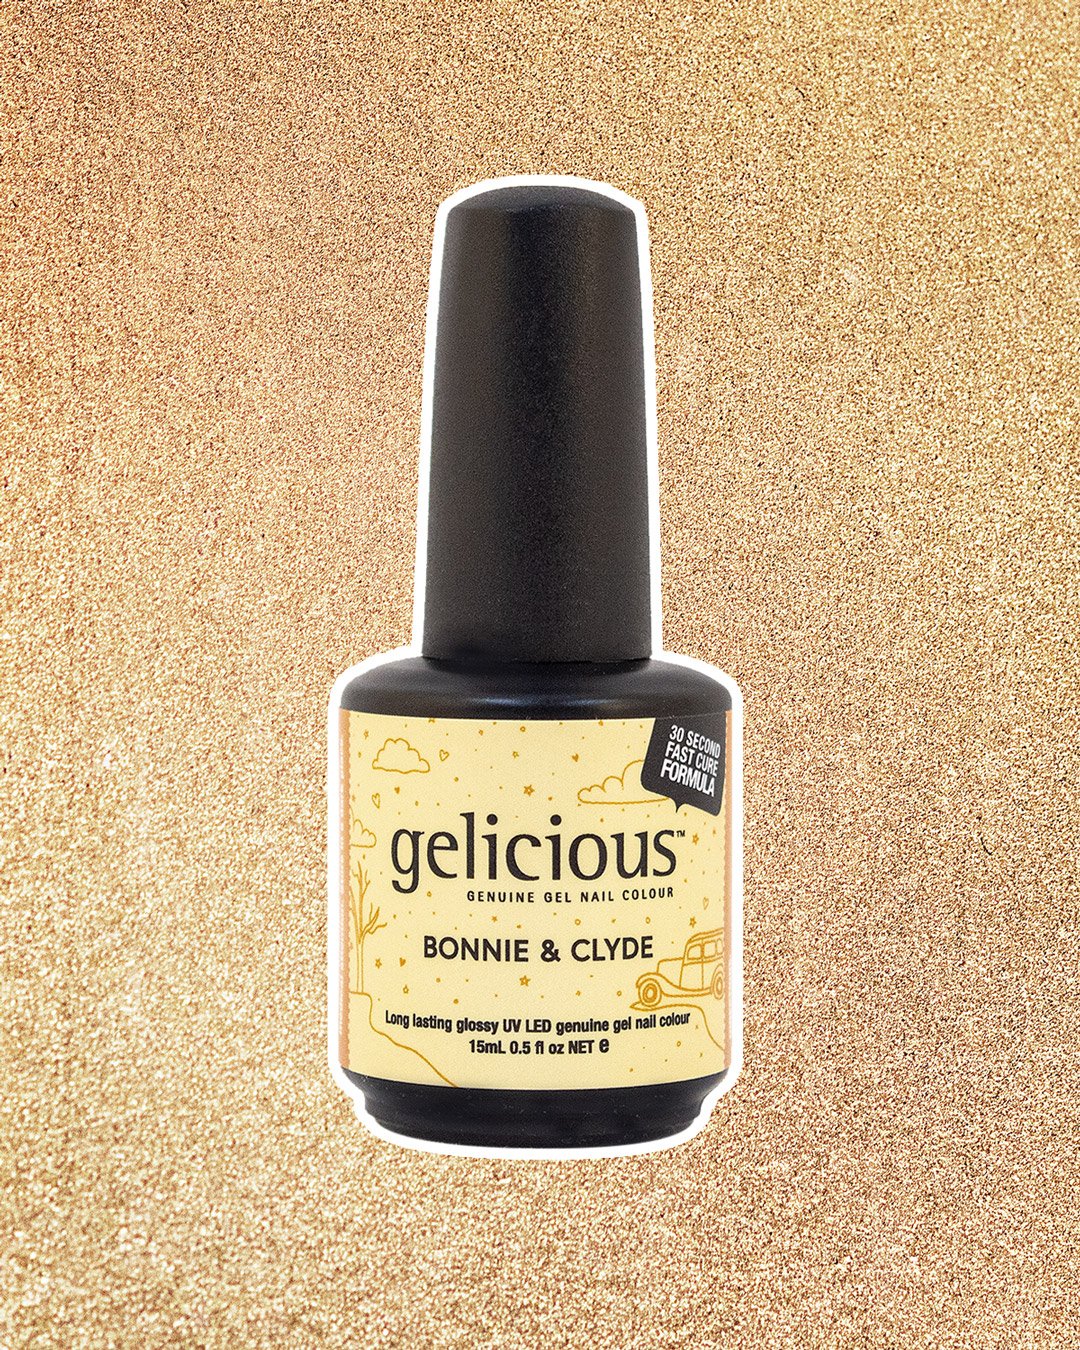 Gelicious Peel-Off Gel Nail Manicure Travel Kit